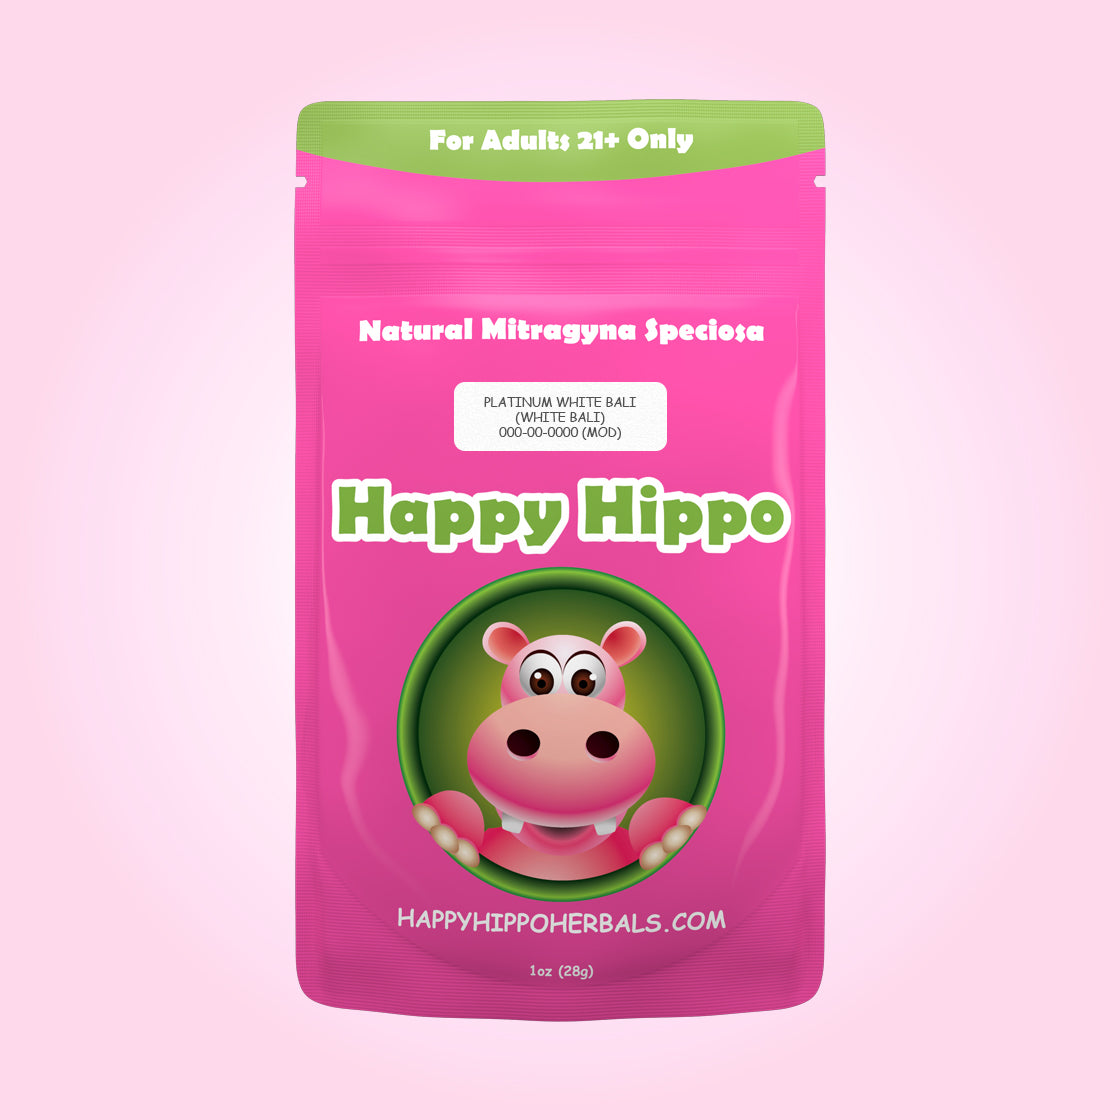 Product Image depicting a 1oz bag of Happy Hippo White Vein Bali Kratom Powder (Mitragyna Speciosa).